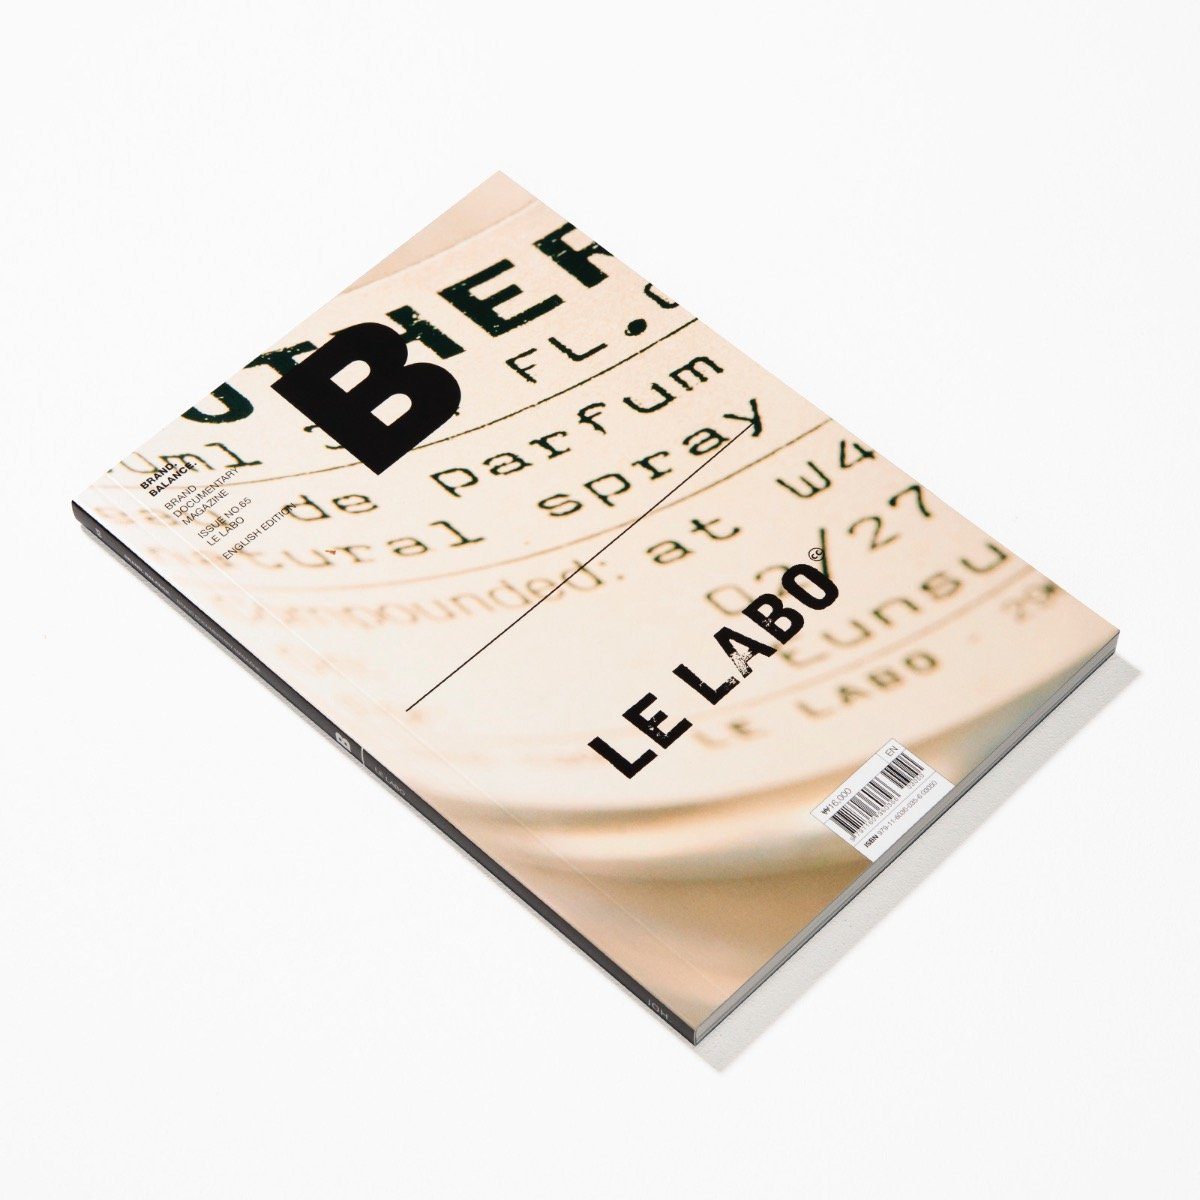 Magazine B Ausgabe 65 LE LABO